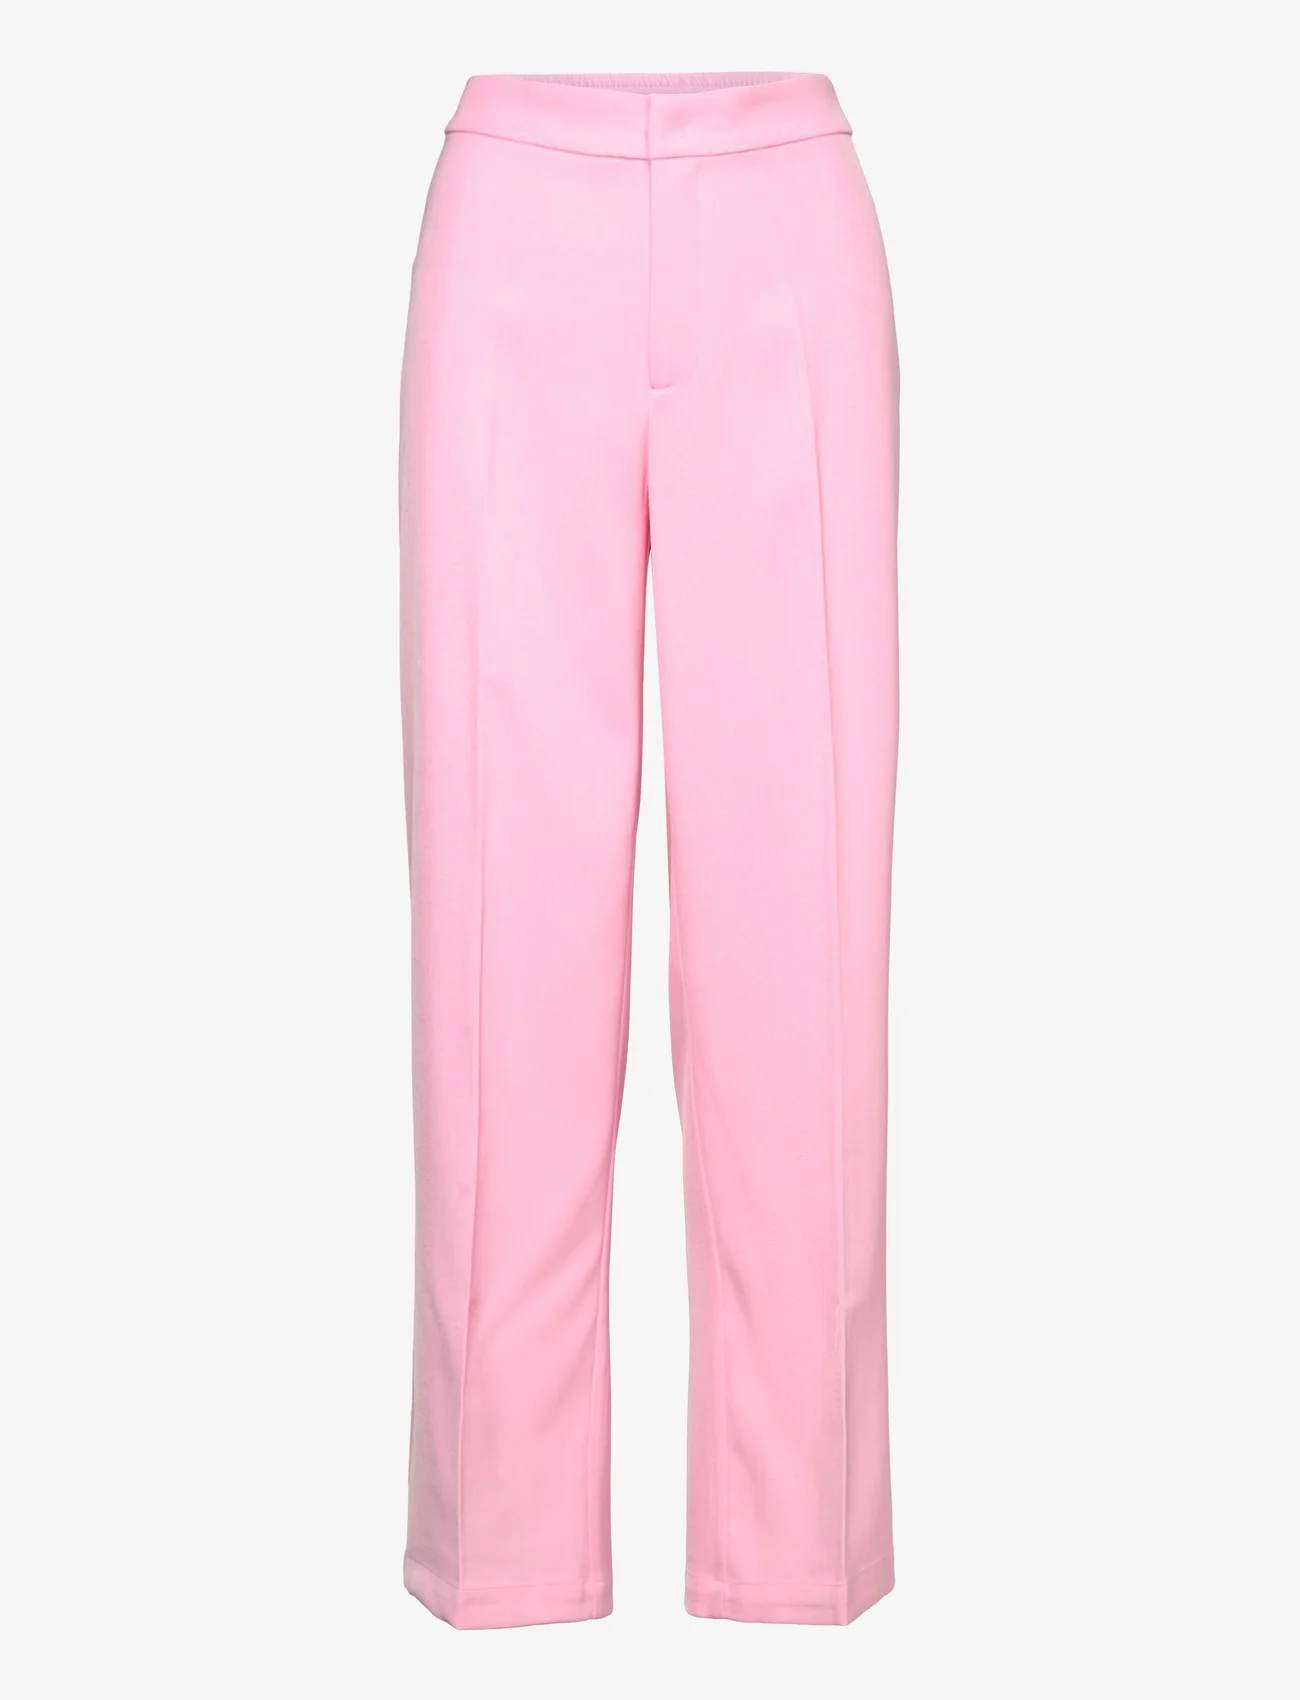 A-View - Diana split pants - suorat housut - pink - 0